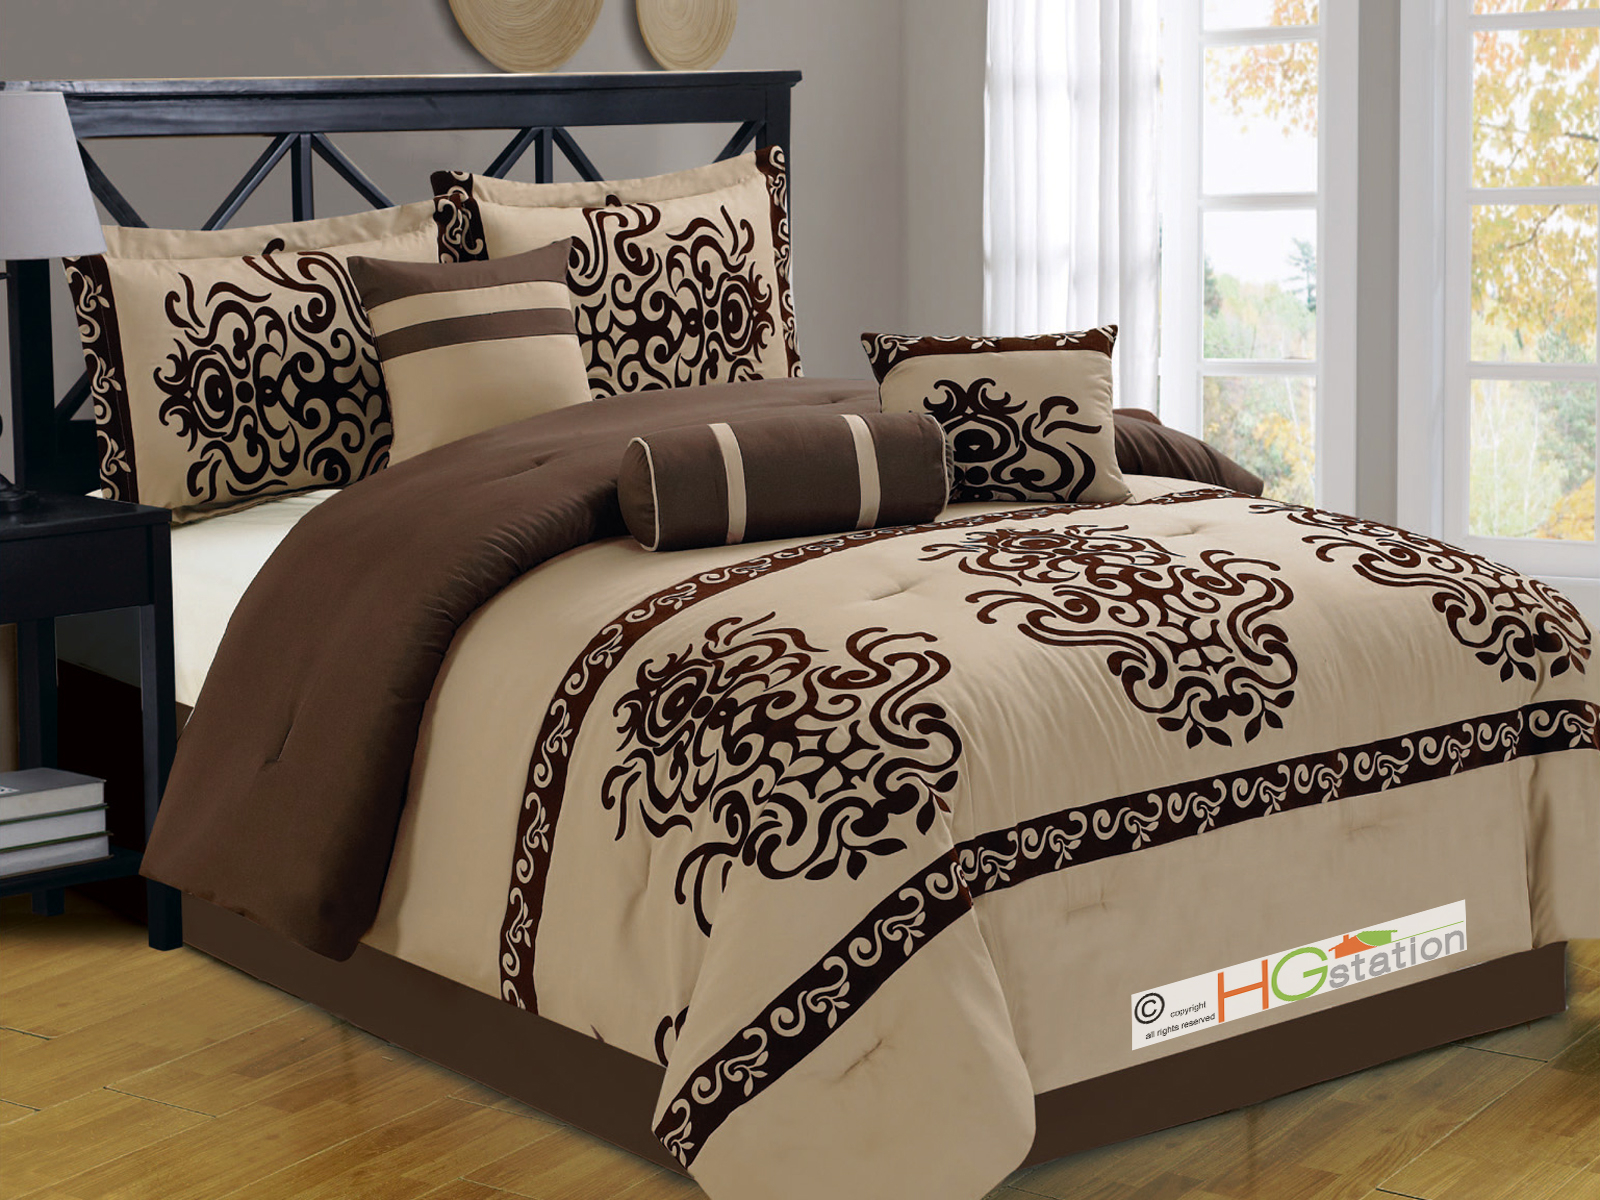 Oversized King Comforter Sets You Ll, Beautiful Bedding Sets King